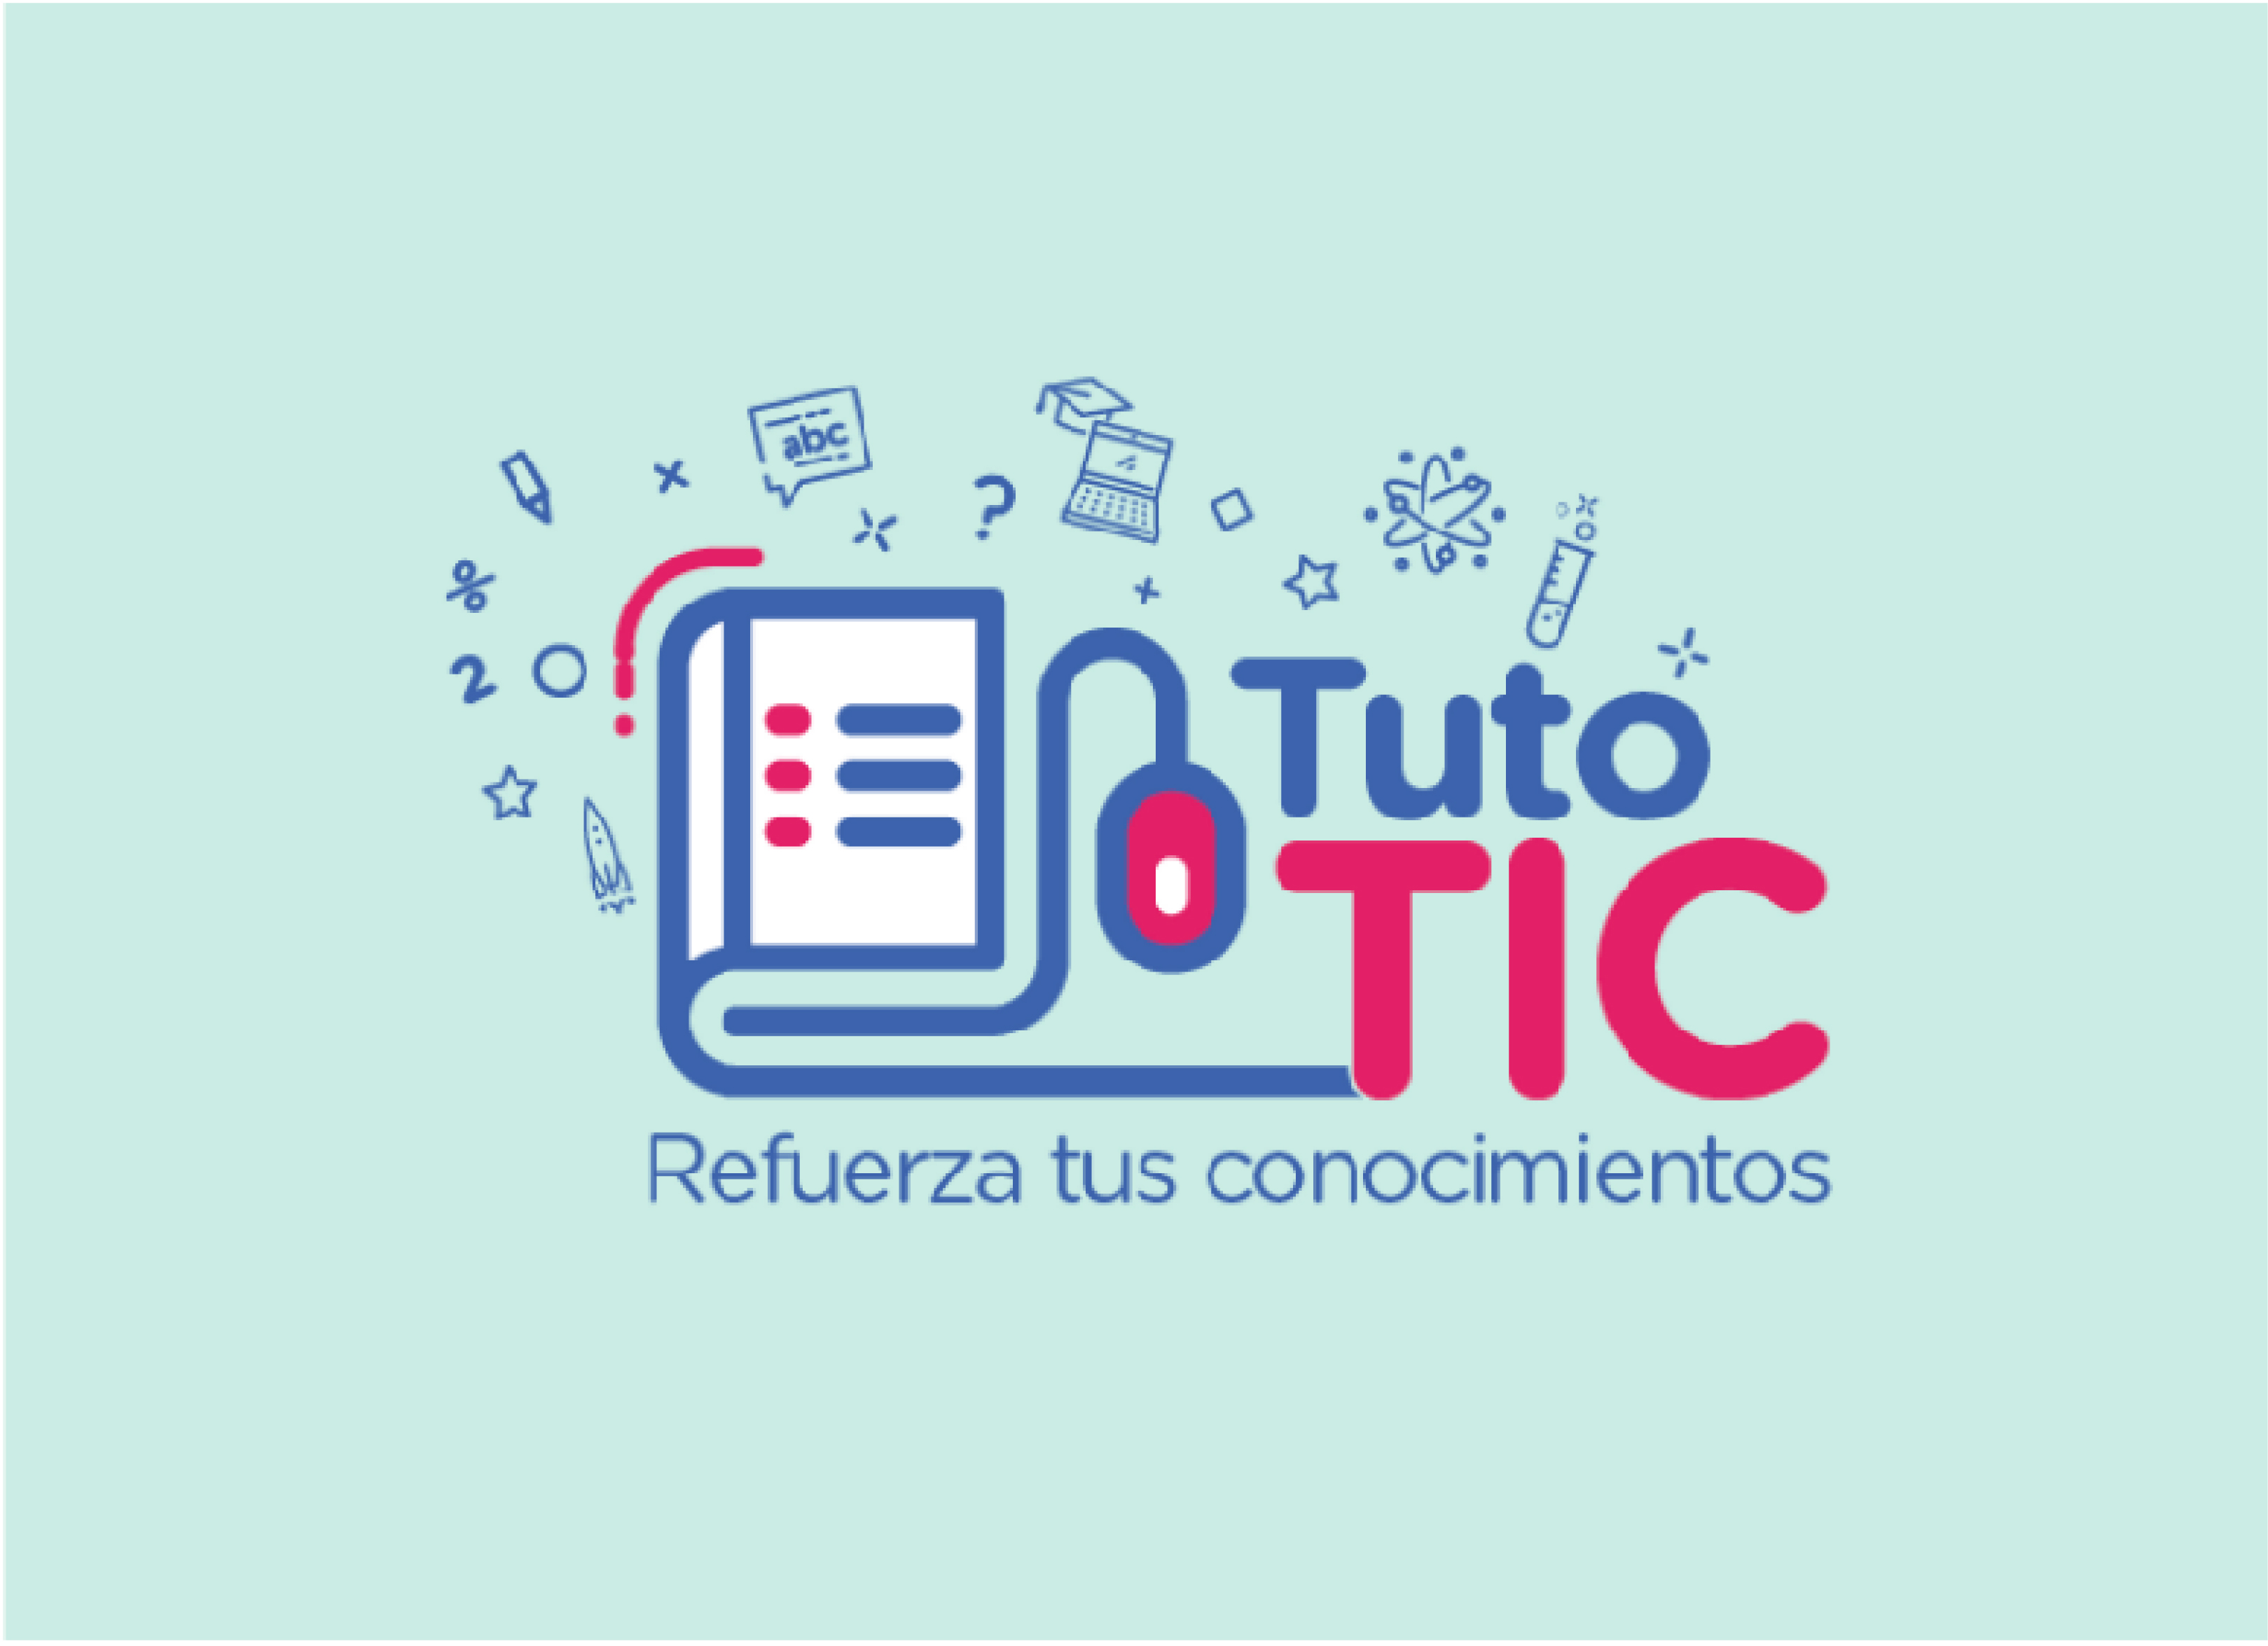 ¡Agenda tus tutorías virtuales con TutoTIC!